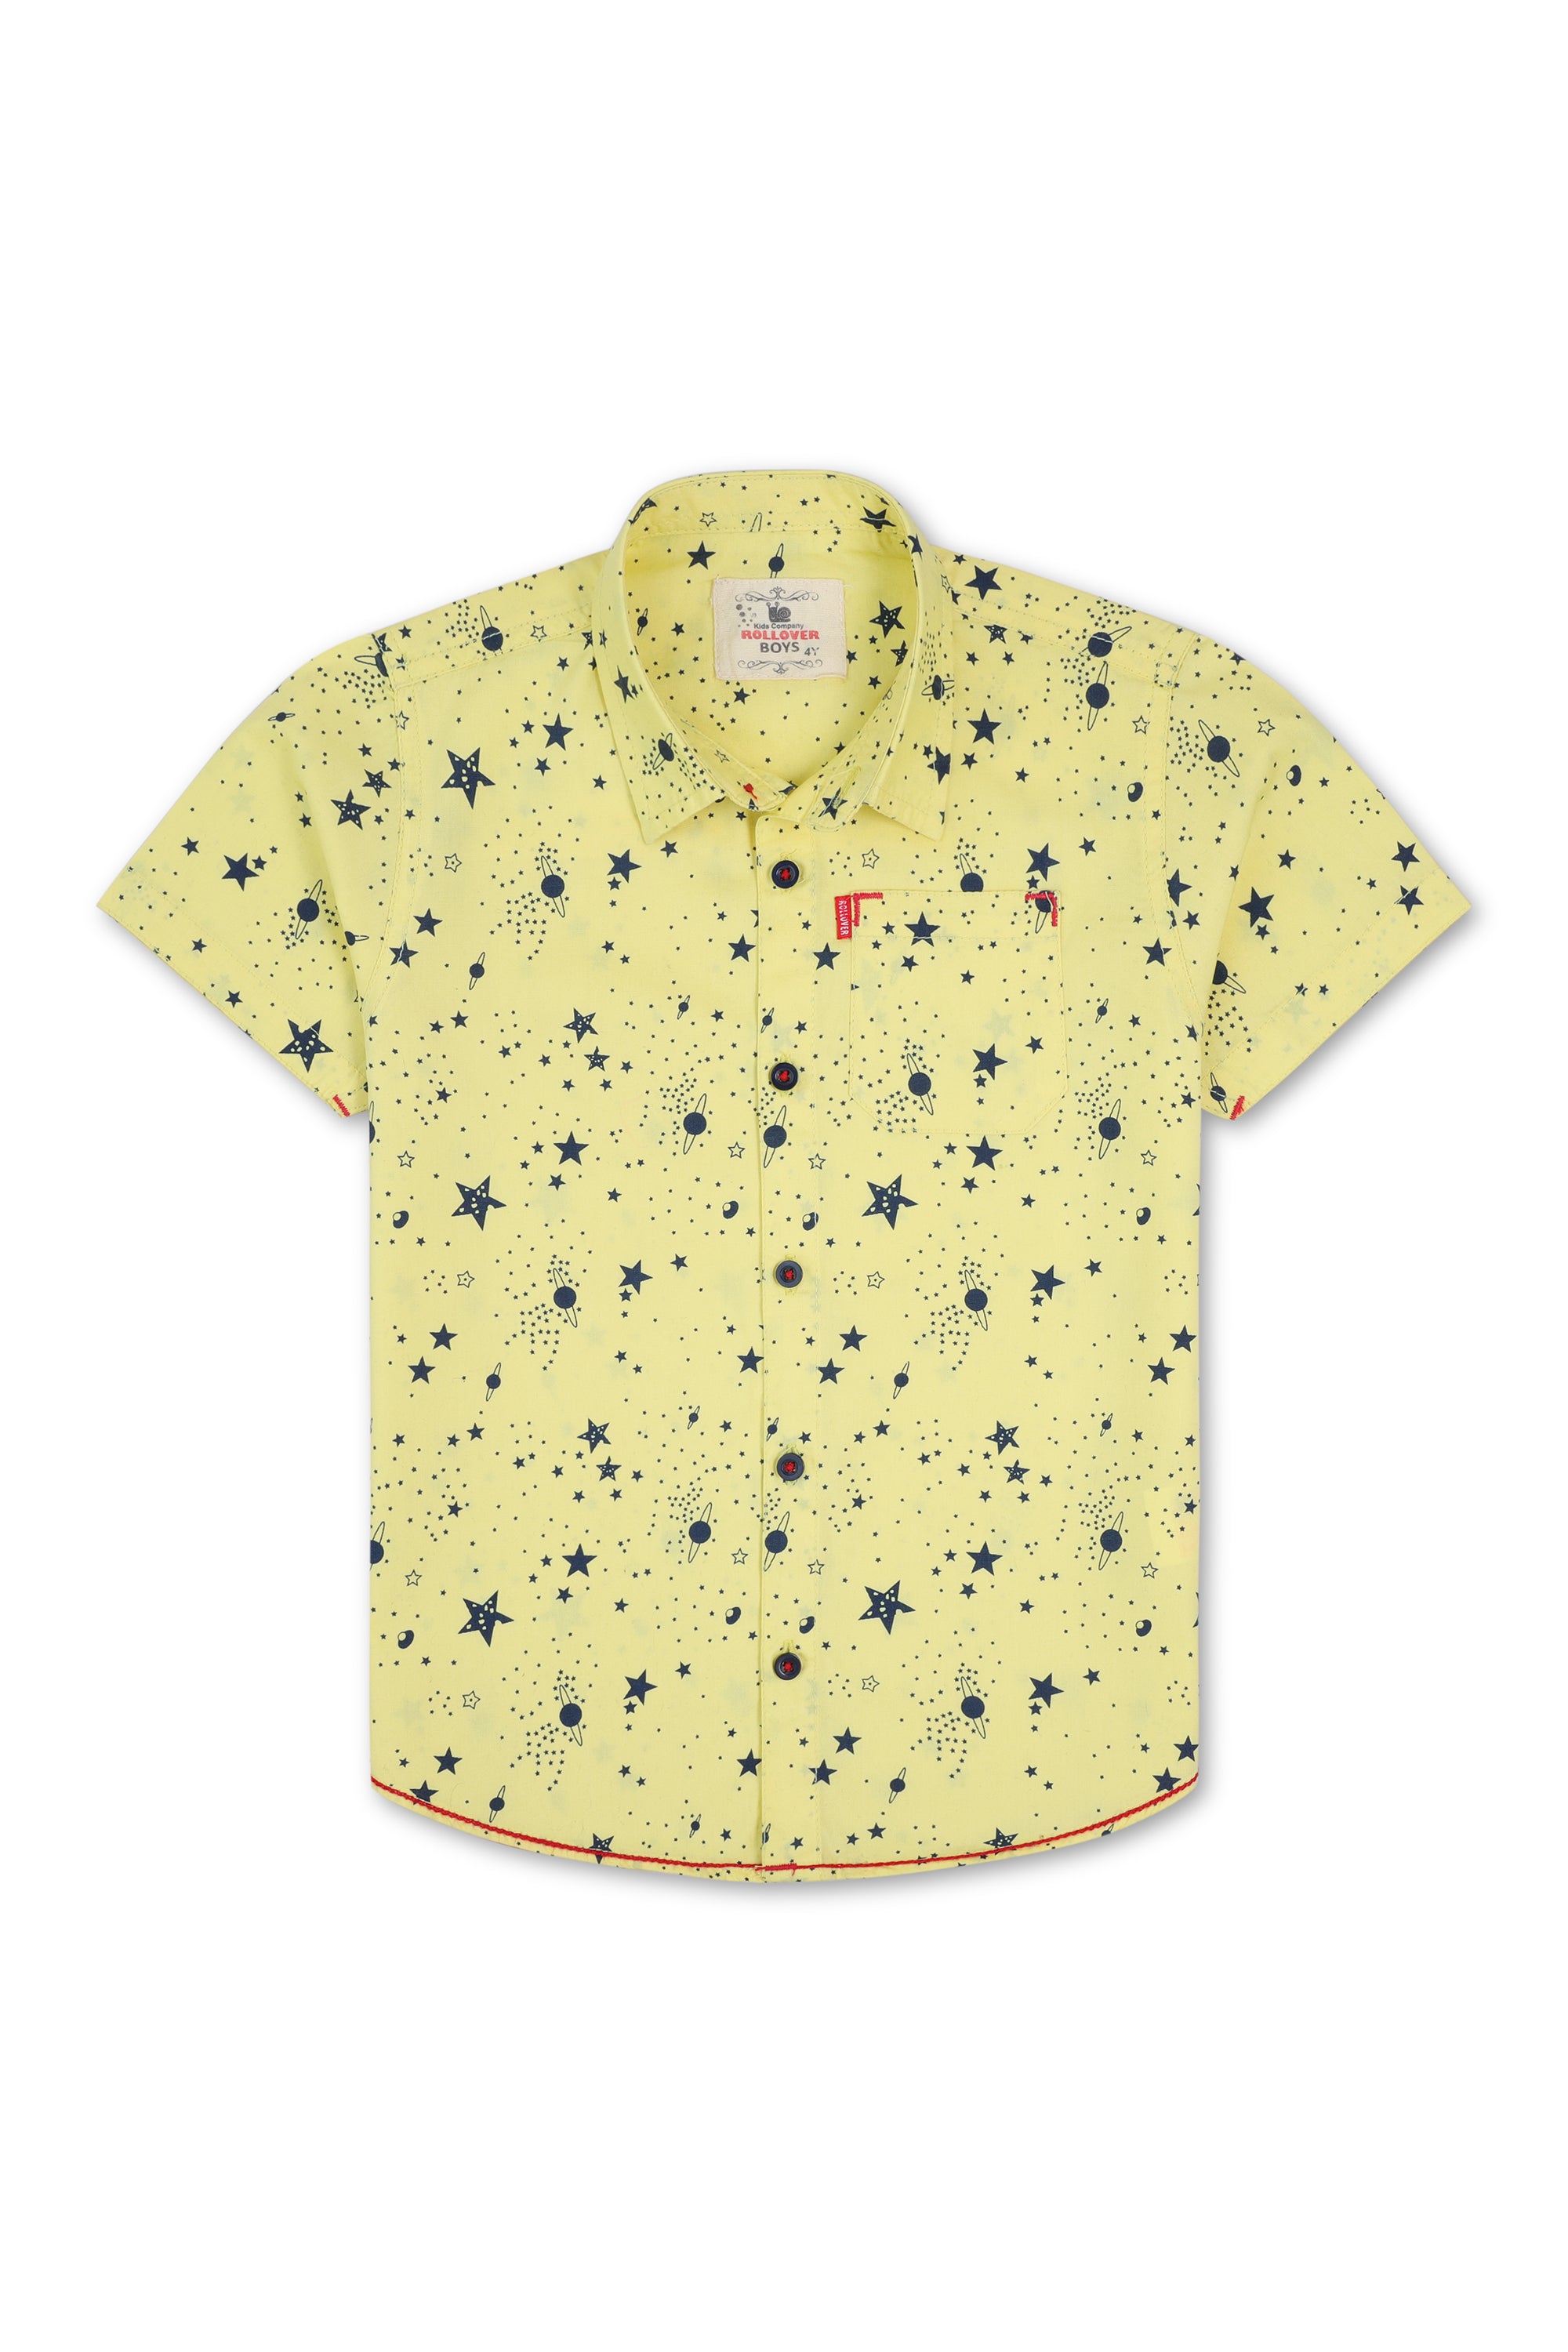 Stellar Yellow Shirt